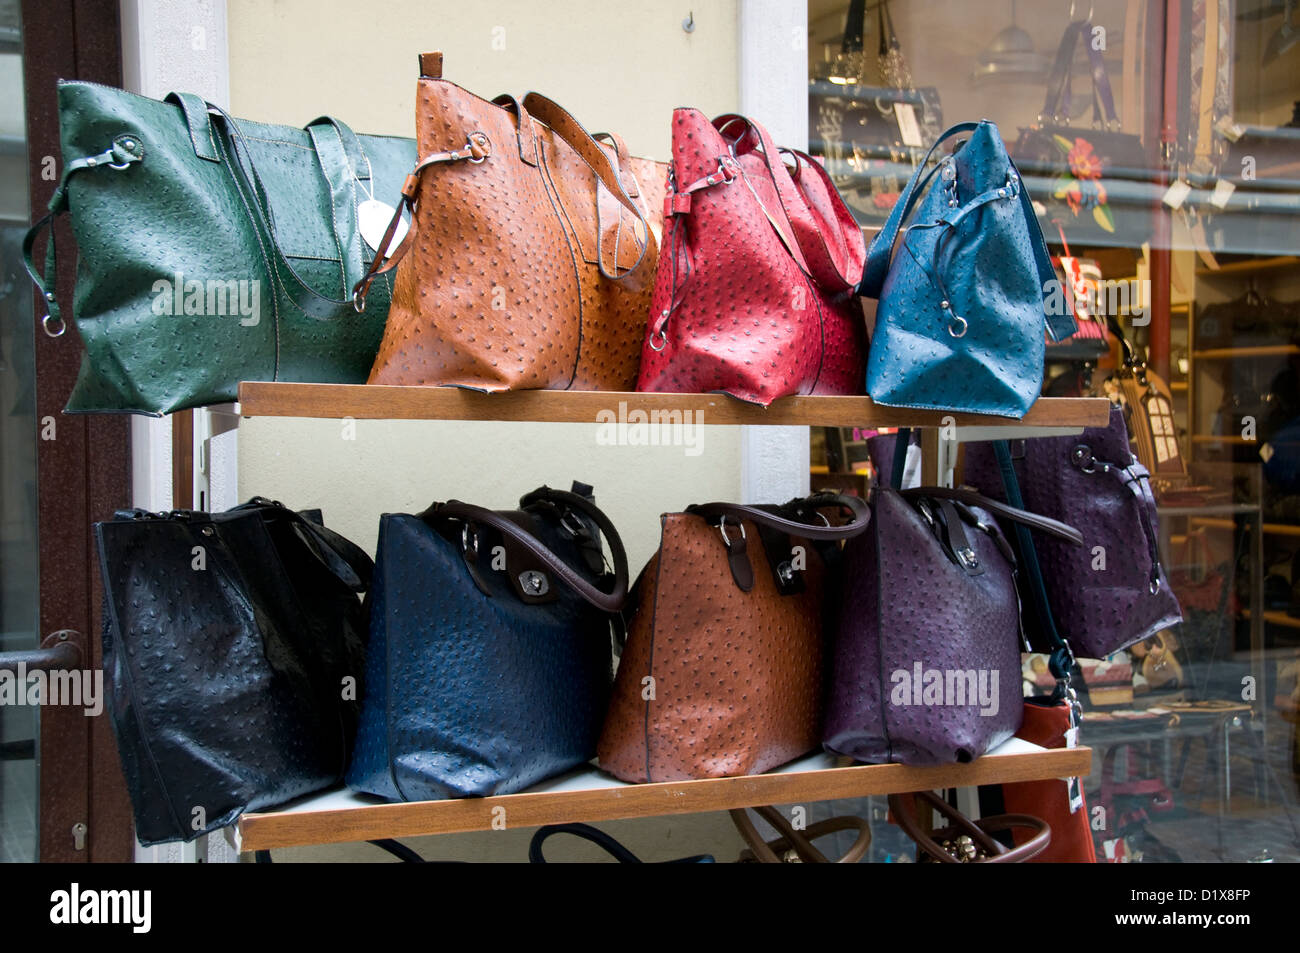 Italian design handbag hi-res stock photography and images - Alamy